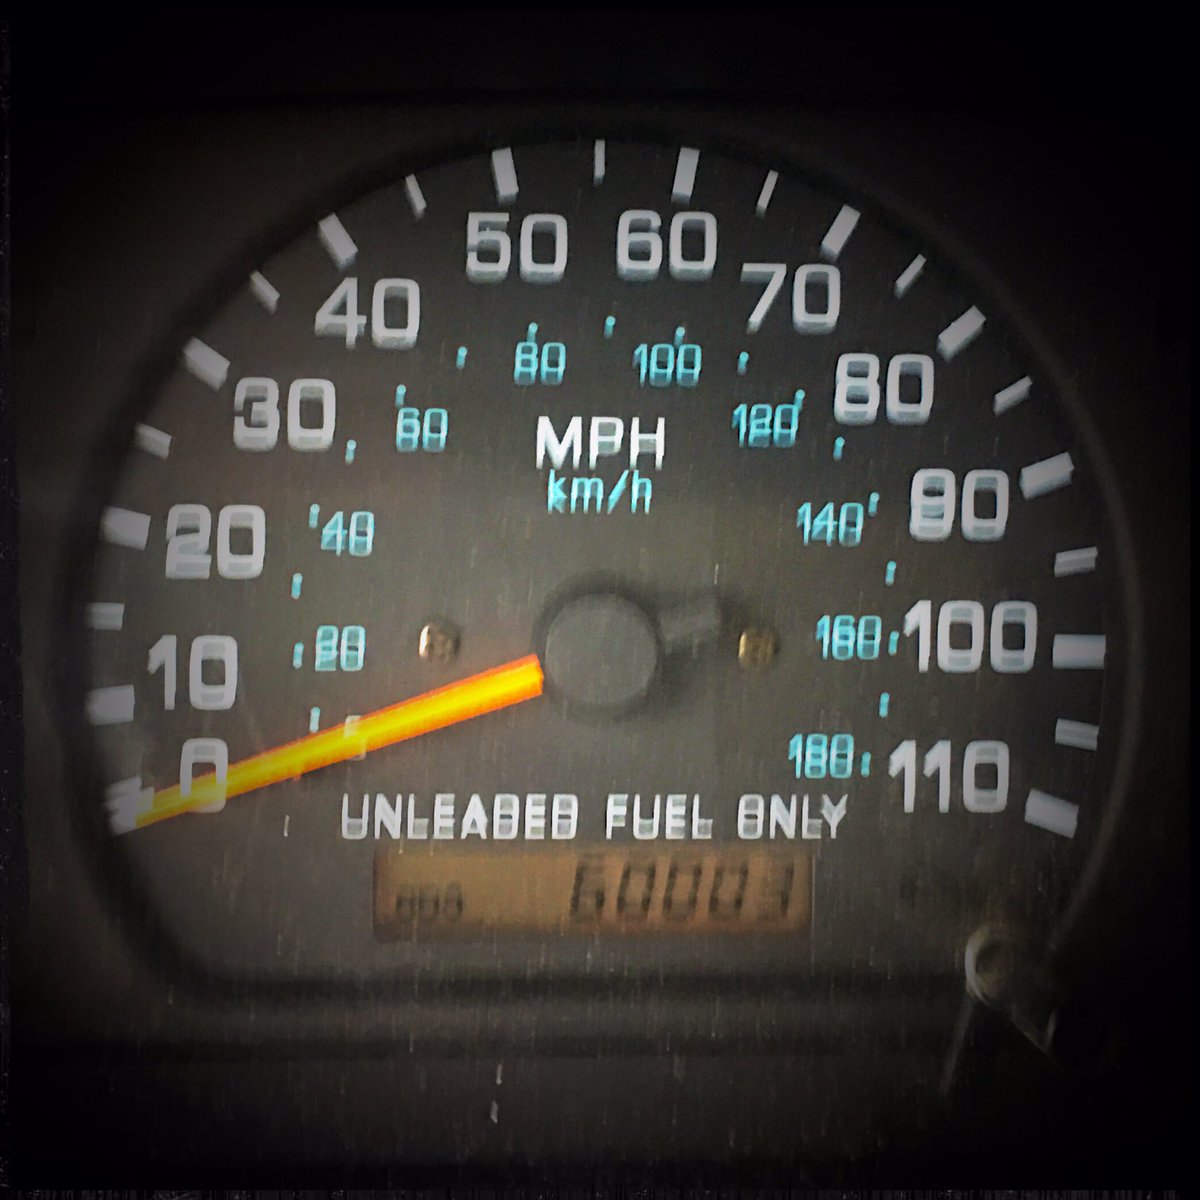 Can't believe it. Finally went over 60k today in my truck. My 98 Frontier. 🤣 #workclosetohome #walkdontdrive #keeptheoilchanged